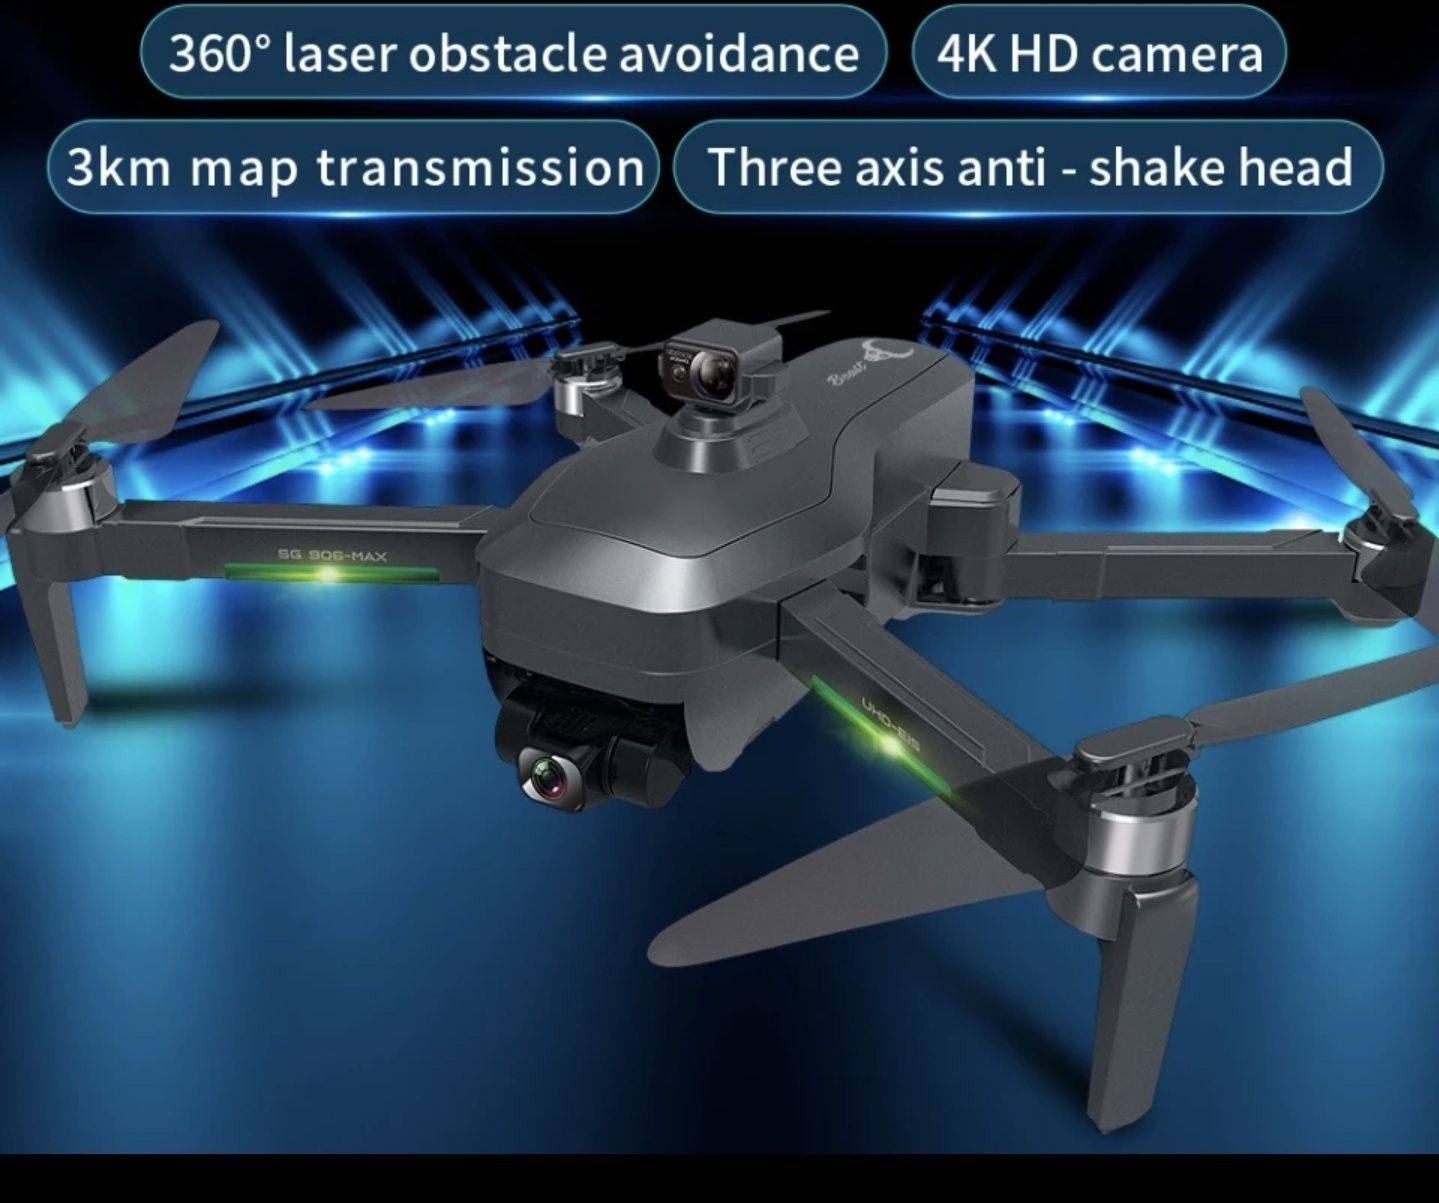 Drona cu Detector Obstacole si gimbal 3x,Camera 4K,Gps,3000Metri,,Noua